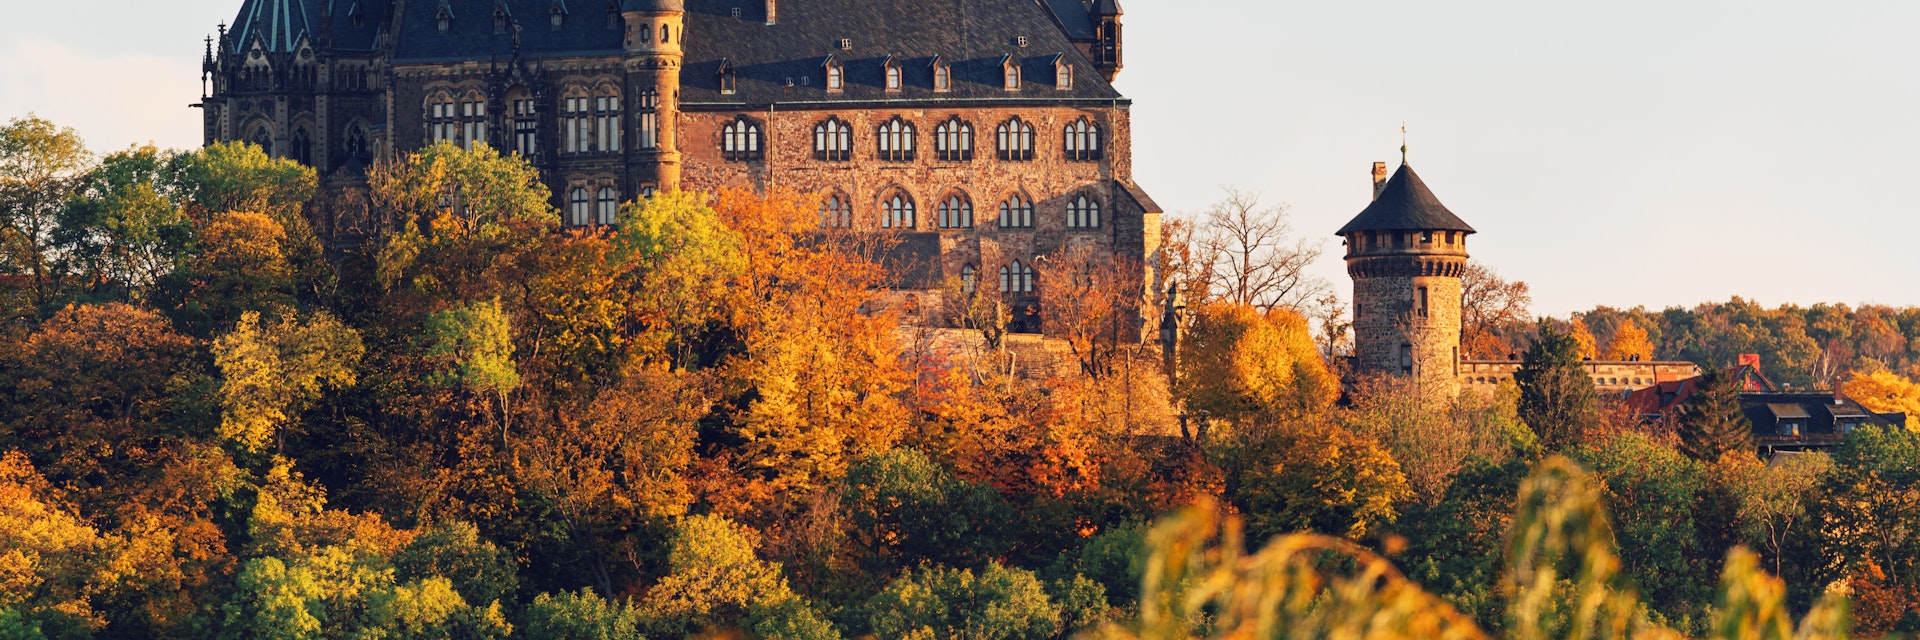 Historic Wernigerode Castle surrounded by an autumn landscape.